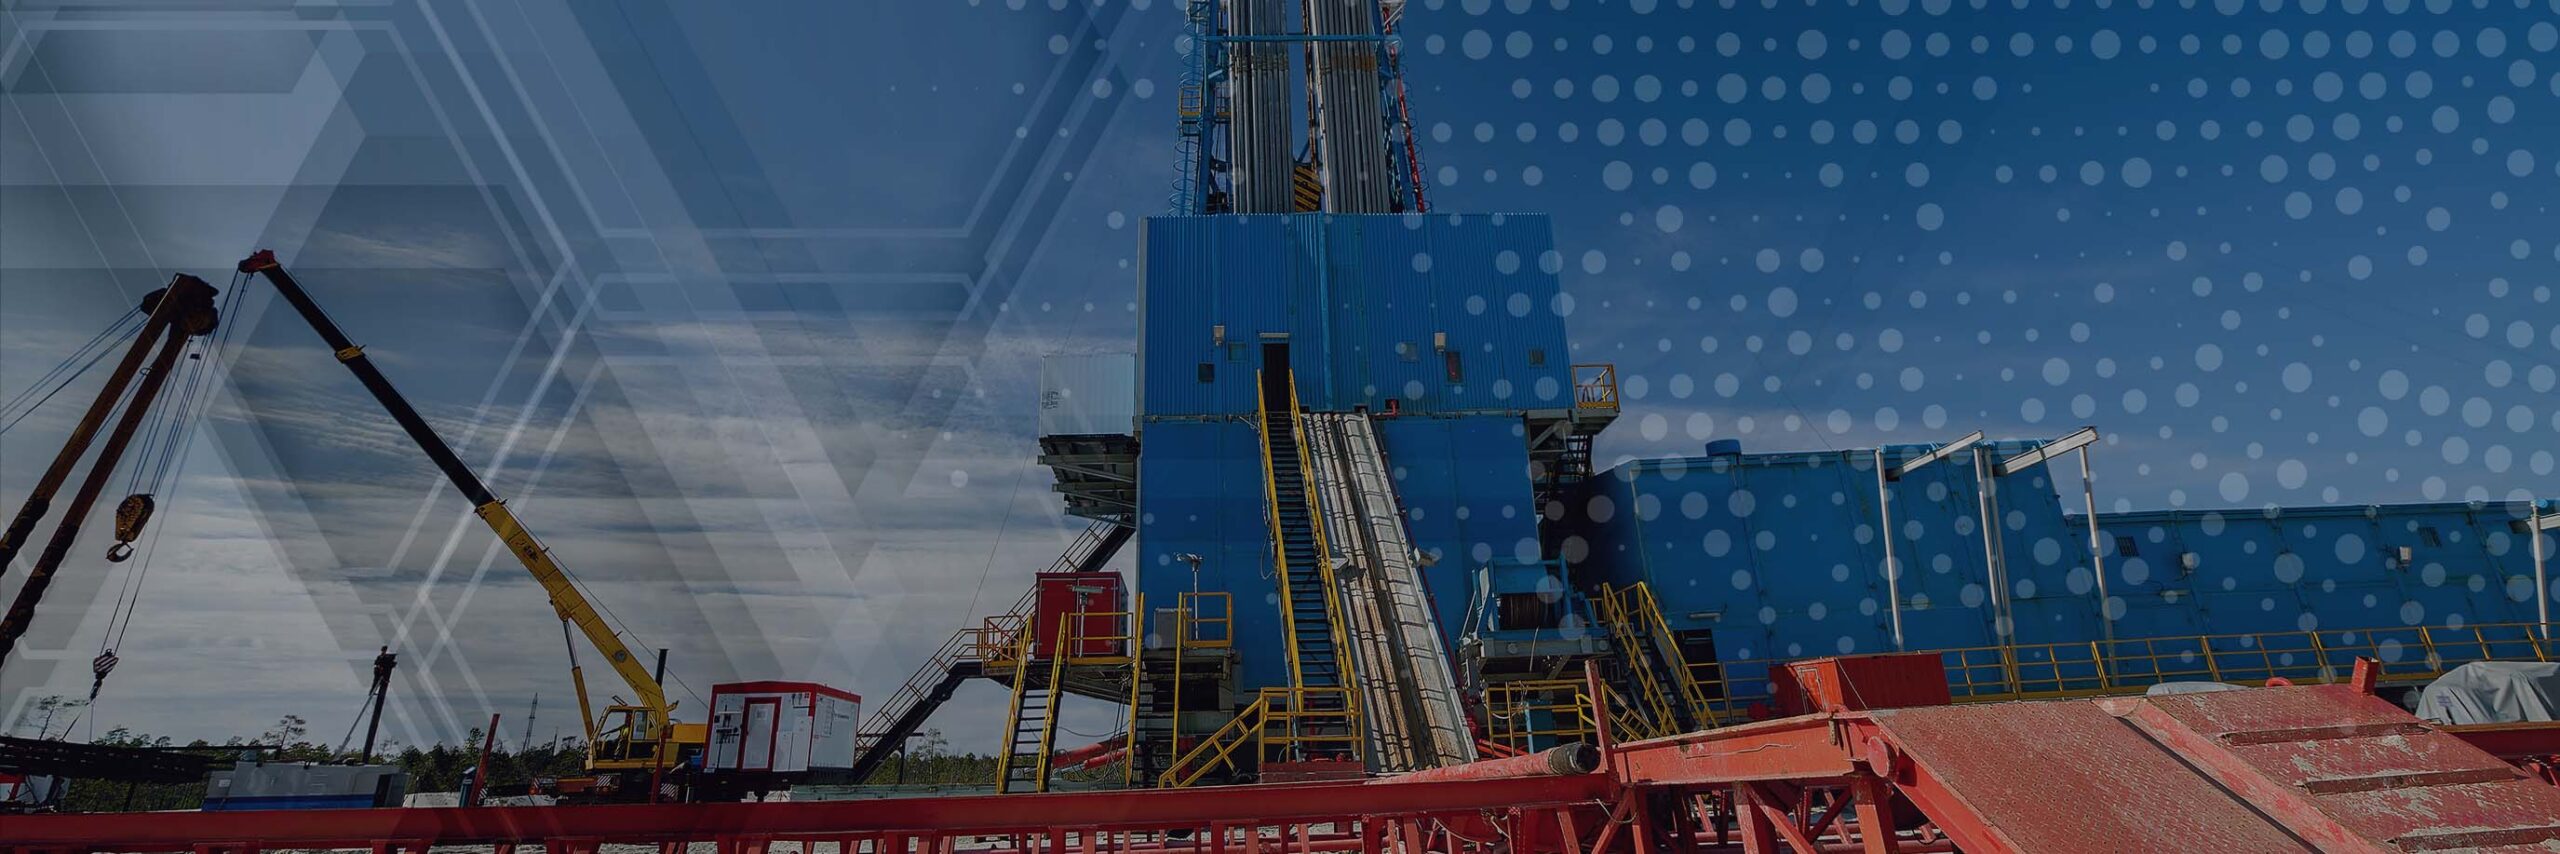 MENA Onshore Drilling Rig Market Forecast